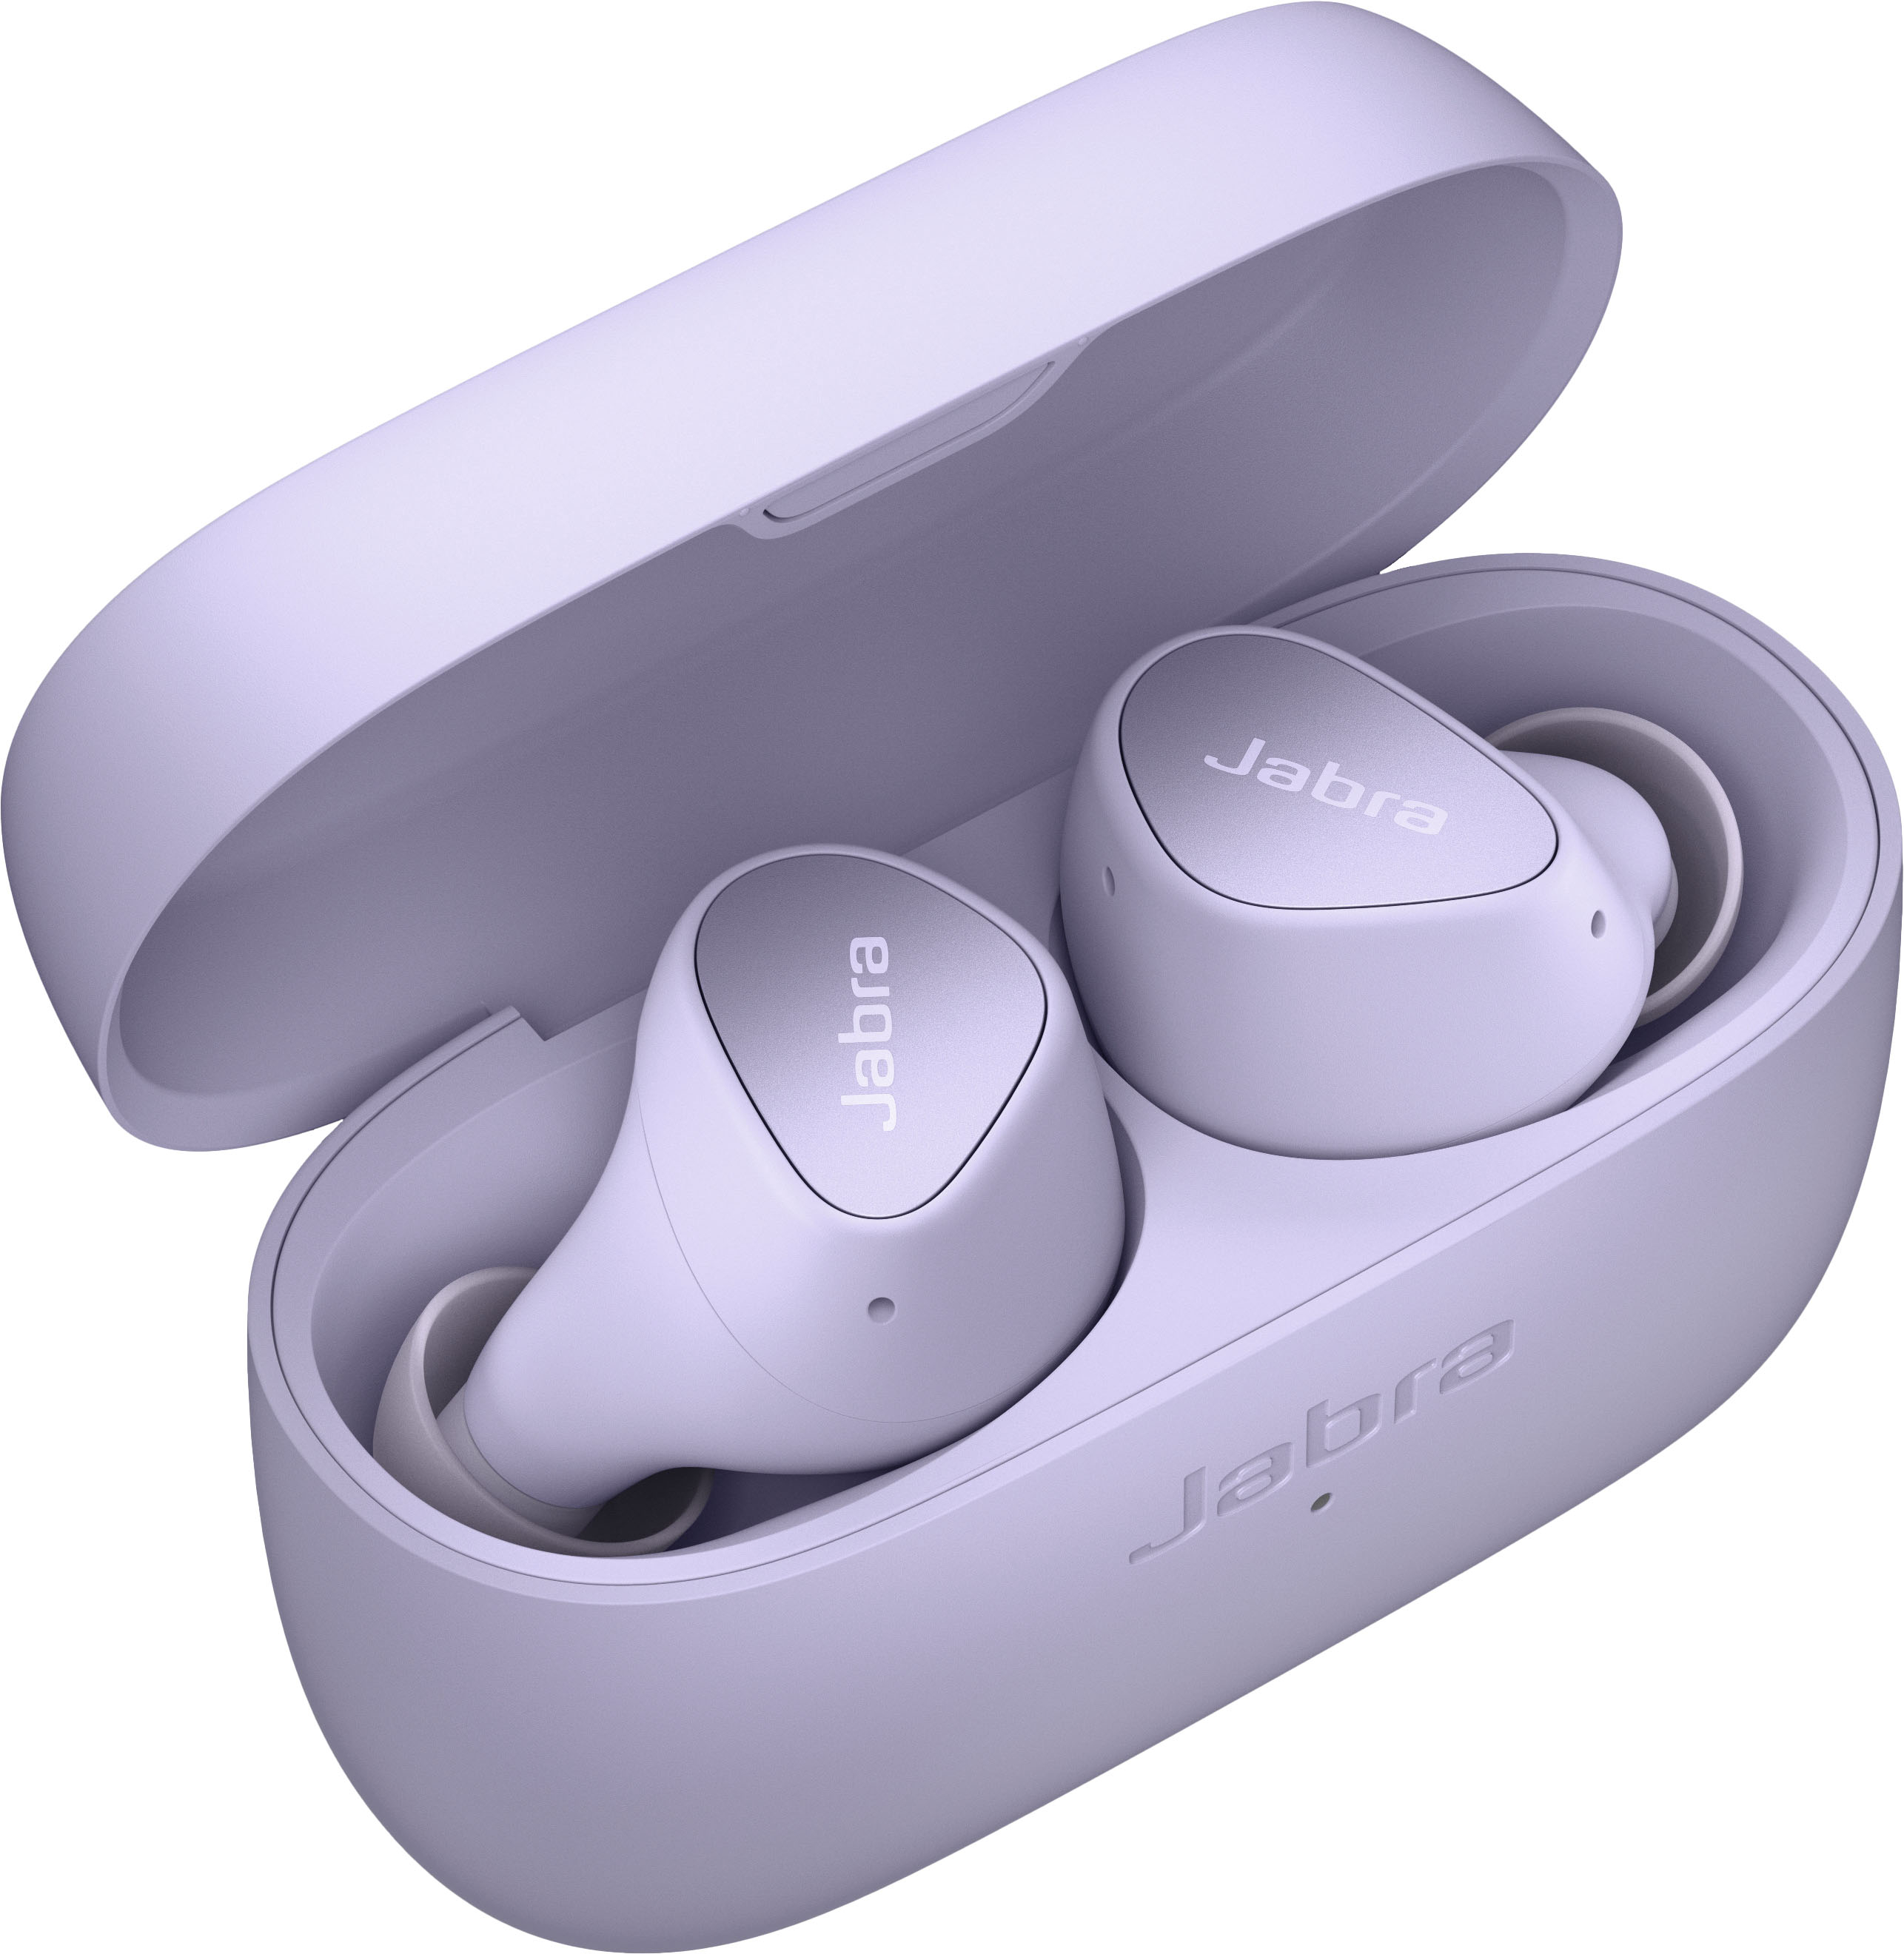 Angle View: Jabra - Elite 3 True Wireless In-Ear Headphones - Lilac